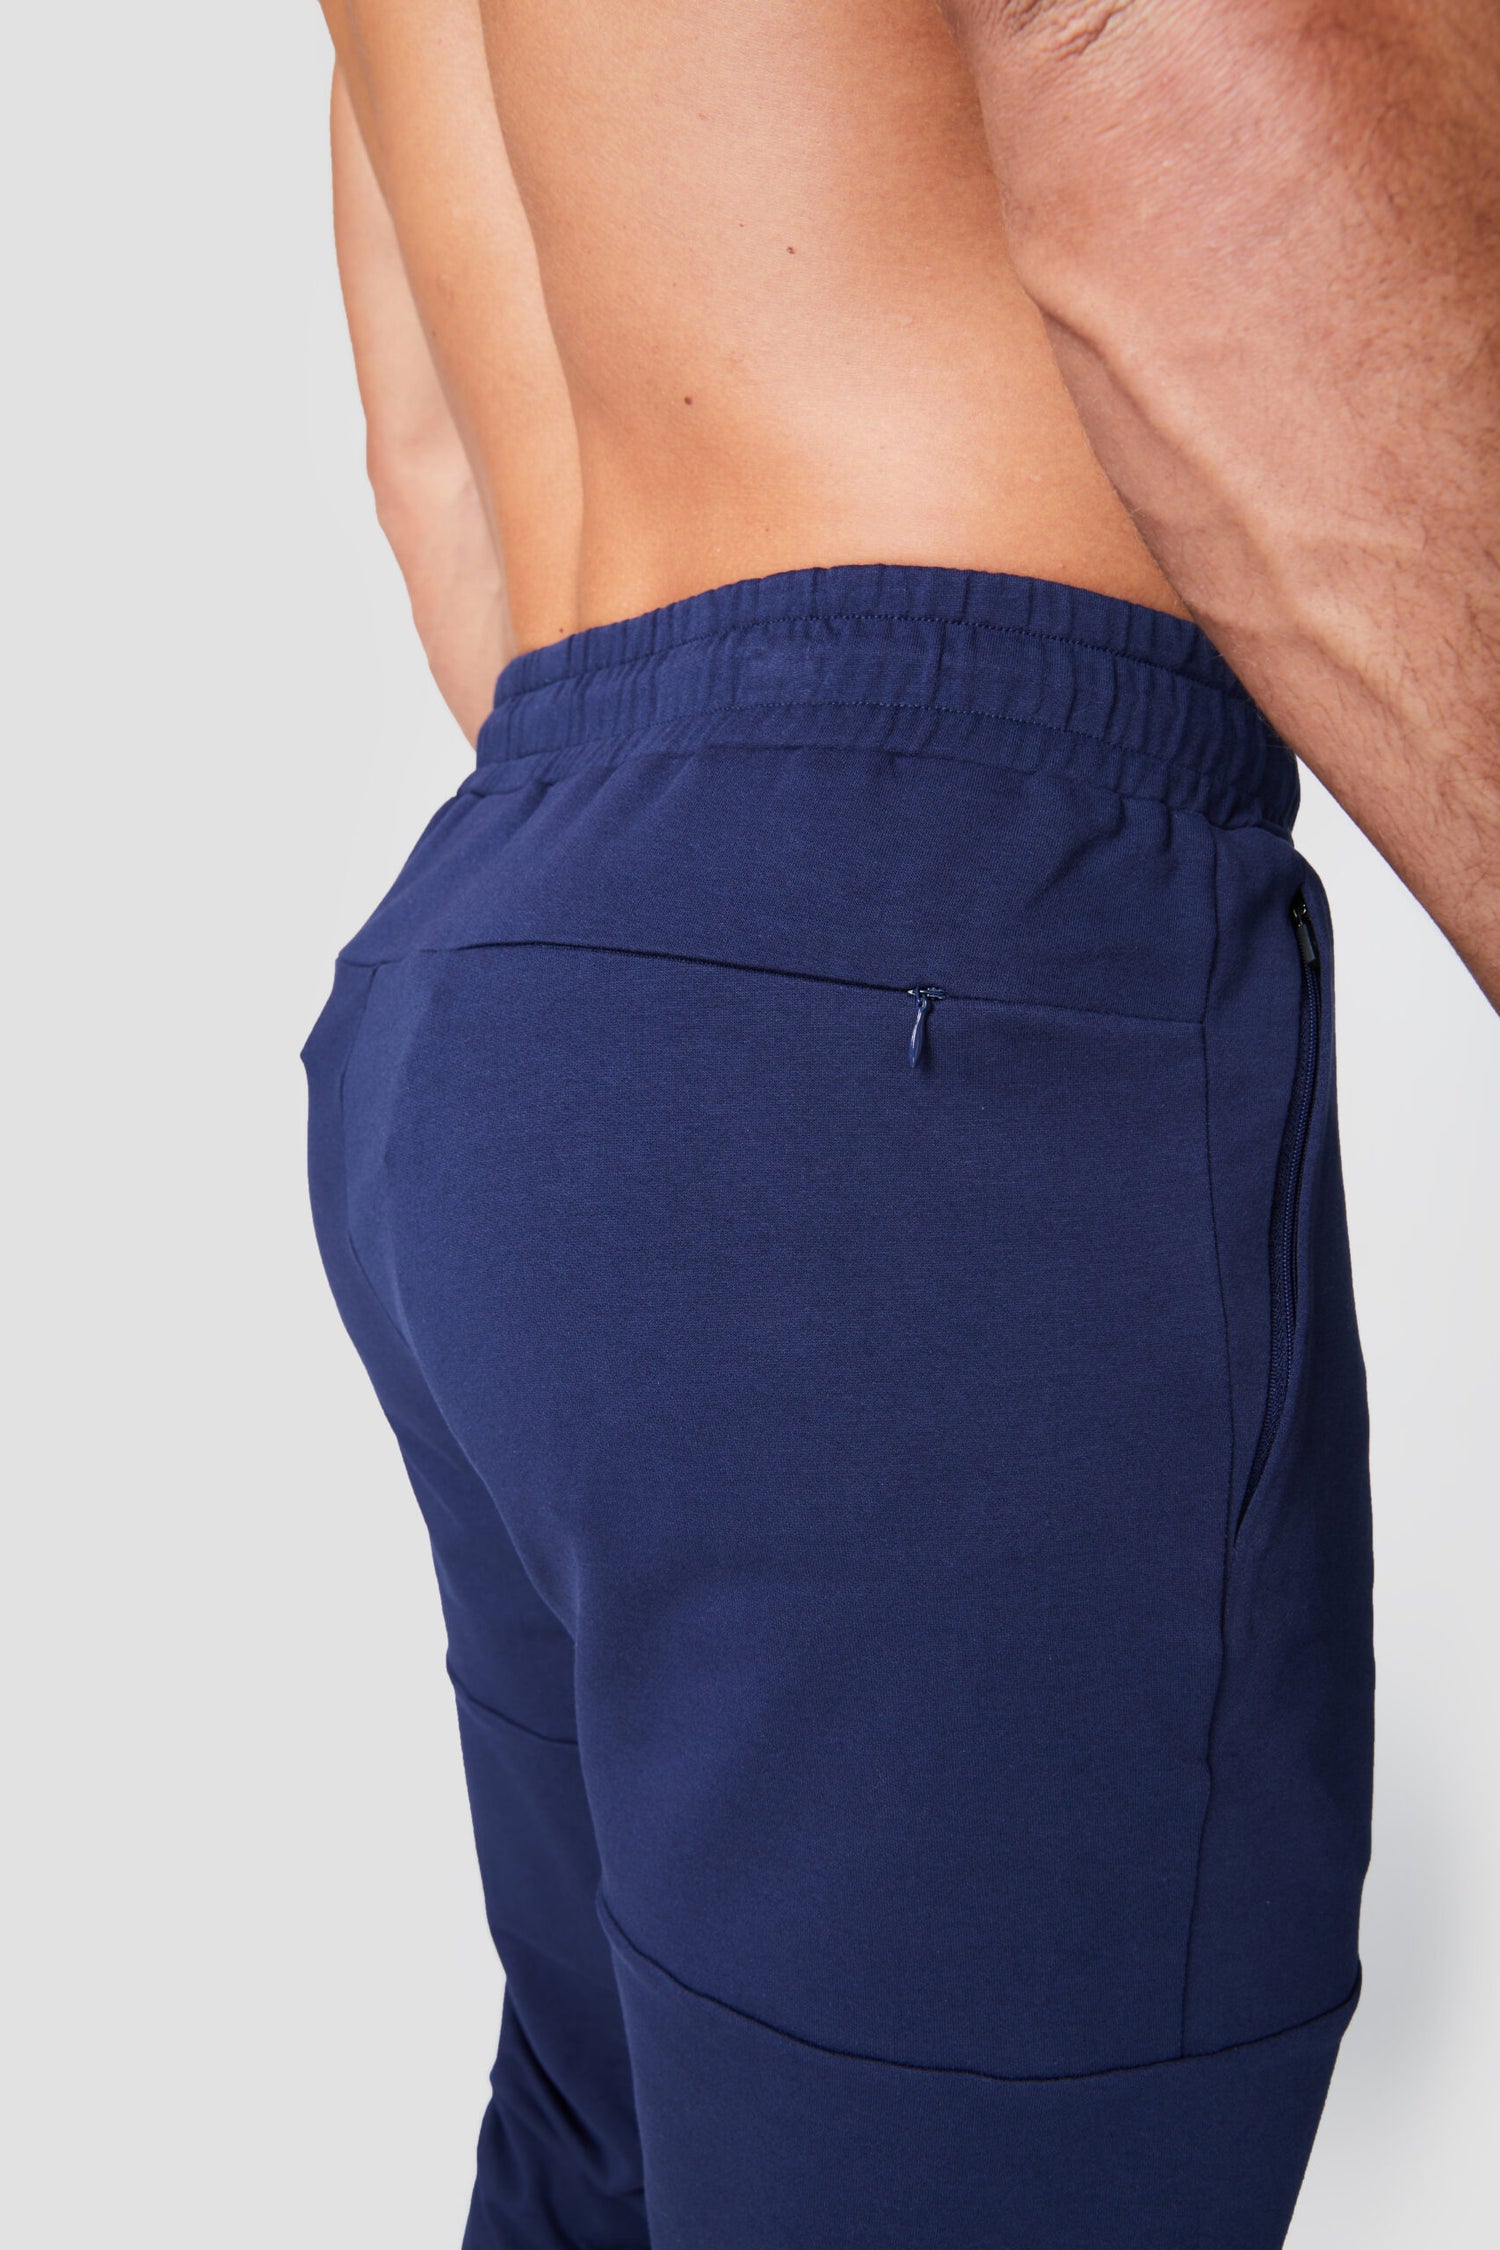 squatwolf-pants-for-men-vibe-jogger-pants-navy-workout-gym-wear